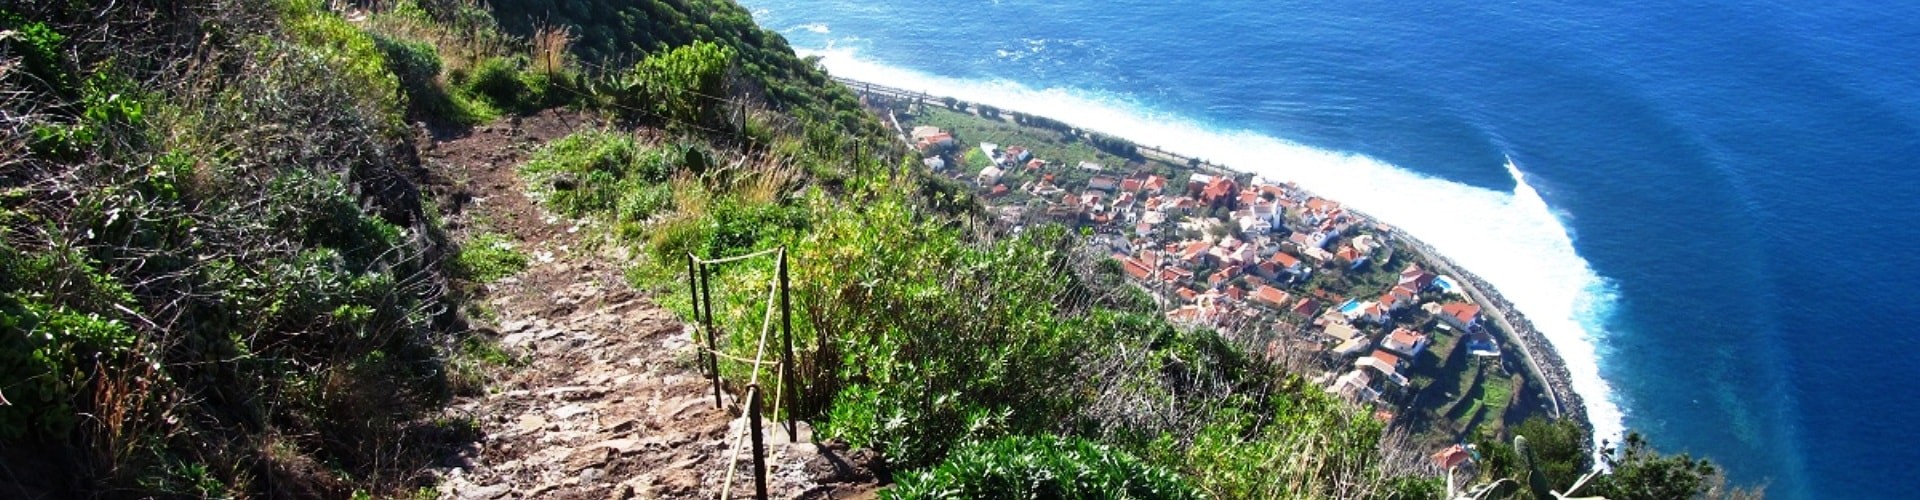 PR20 Vereda do Jardim do Mar Hiking Trail in Madeira